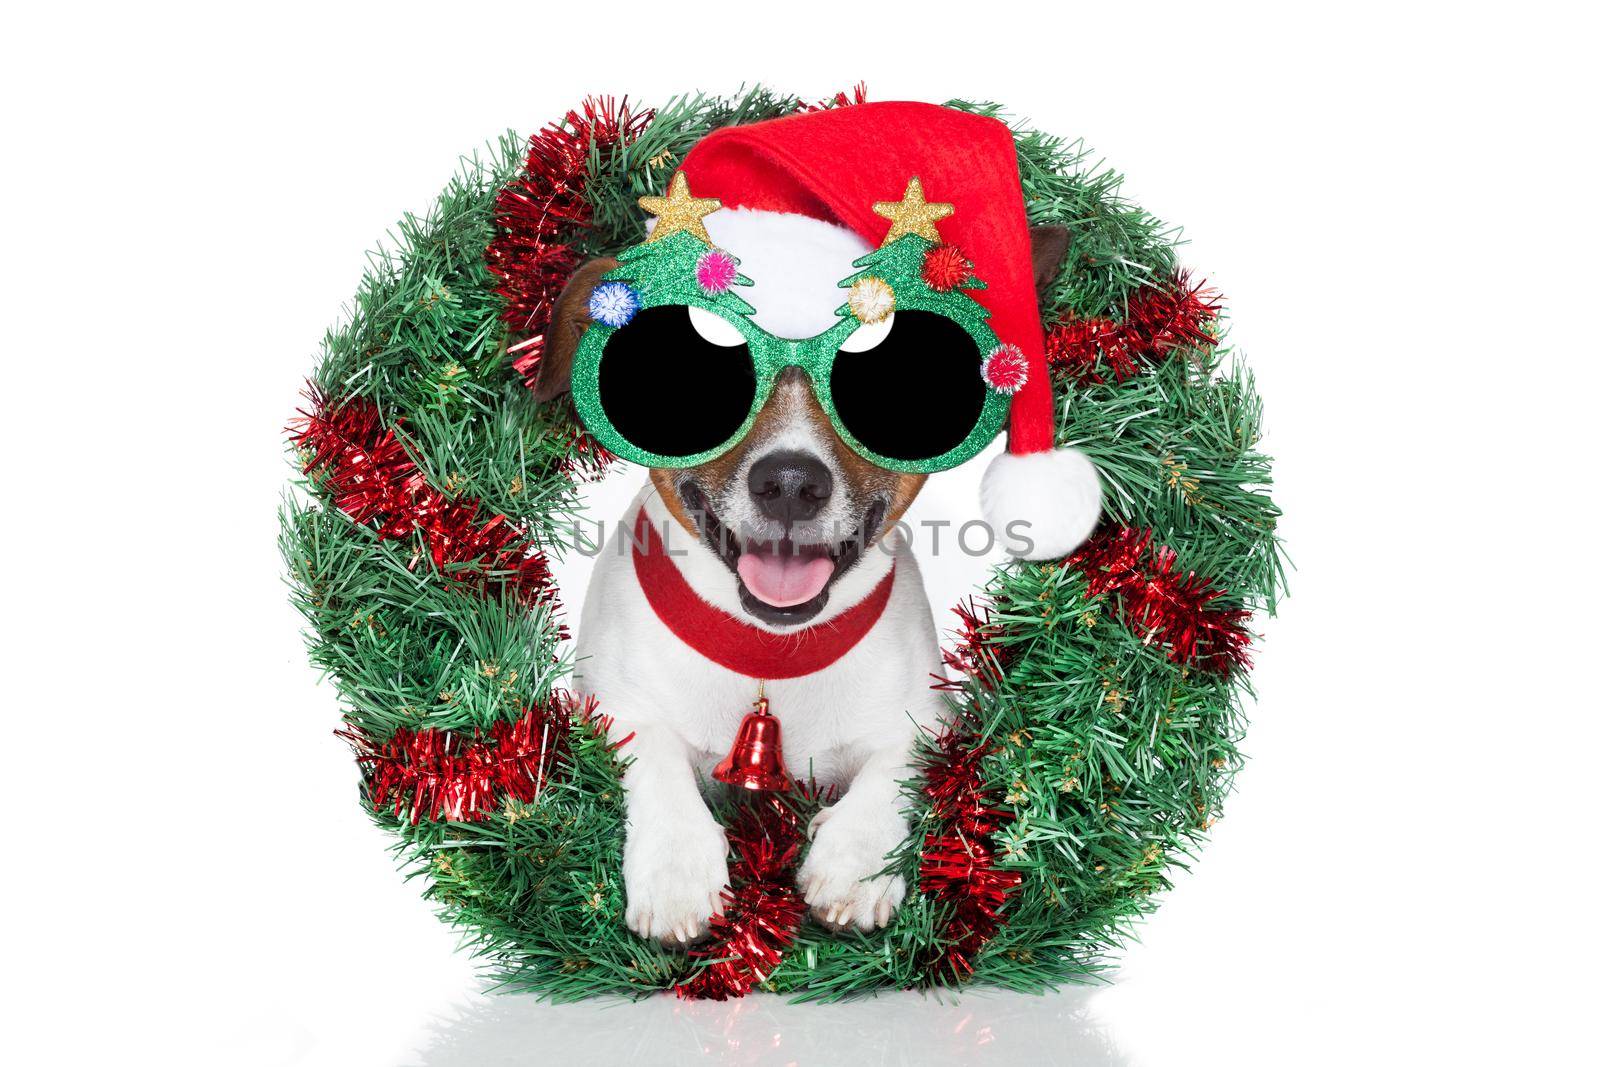 xmas dog with funny sunglasses